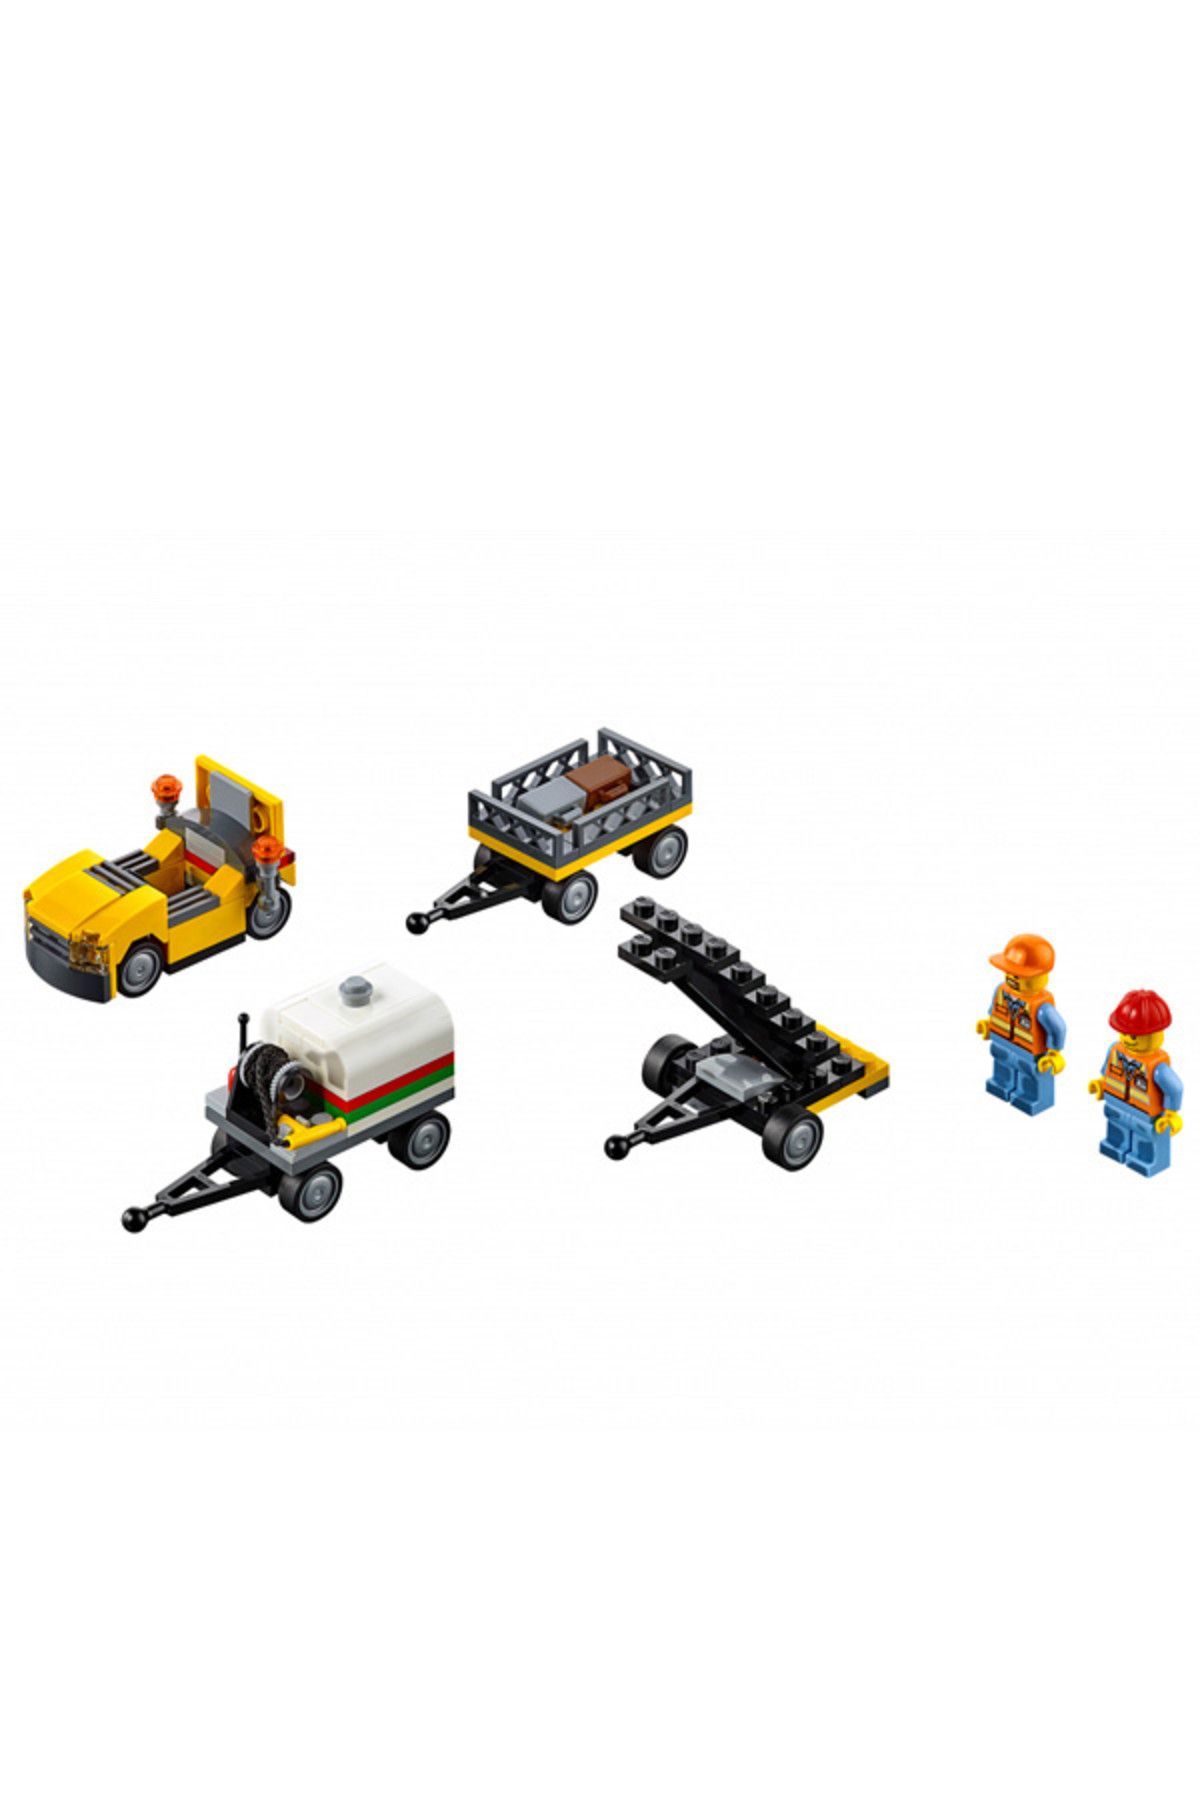 LEGO لگو نمایشگاه هوایی فرودگاه شهر 60103 /